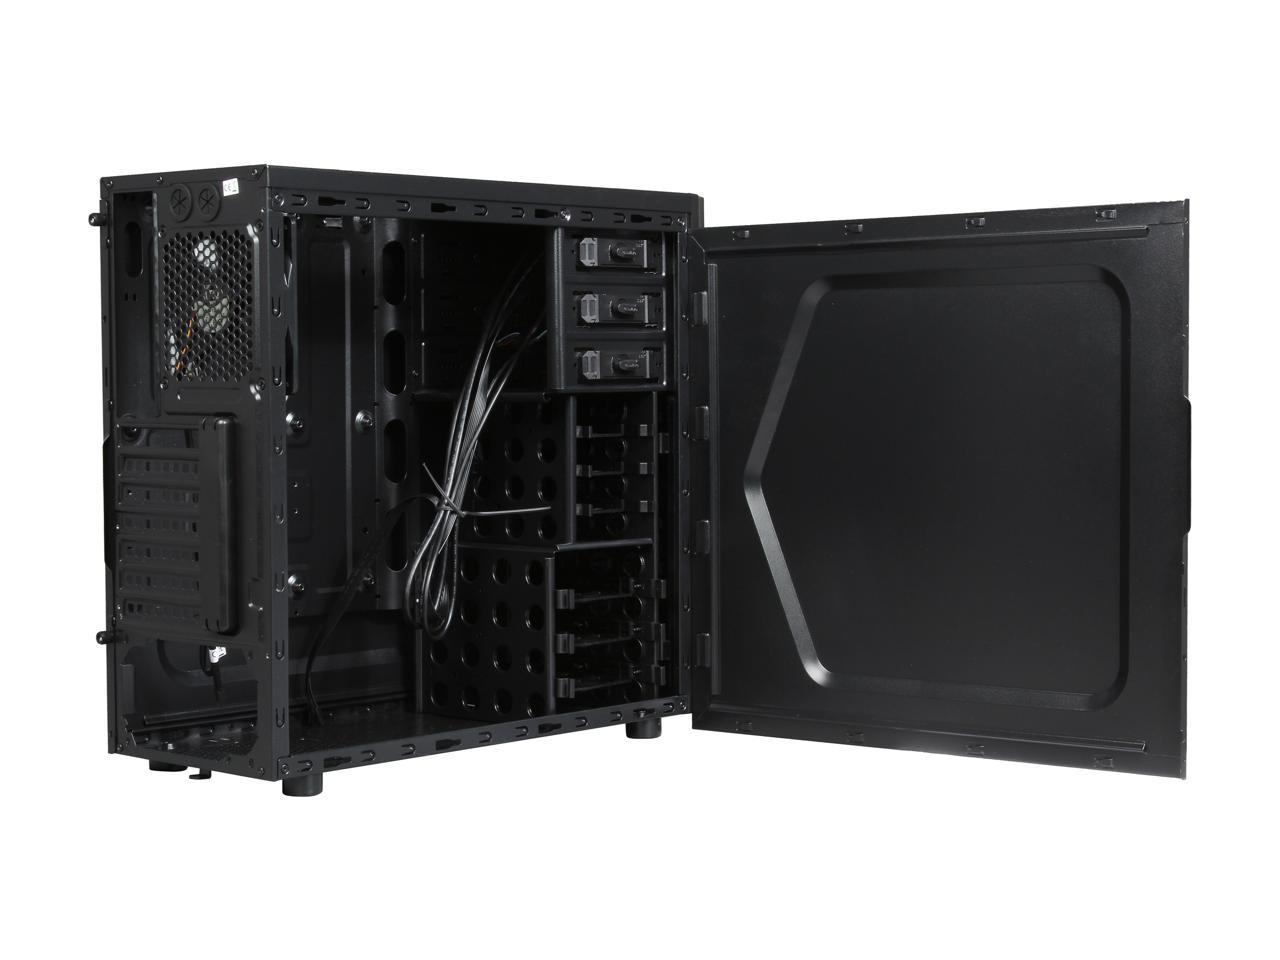 Thermaltake Versa H22 SPCC ATX Mid-Tower Gaming Case 7 x Expansion Slots 3 x 5.25" External Drive Bays